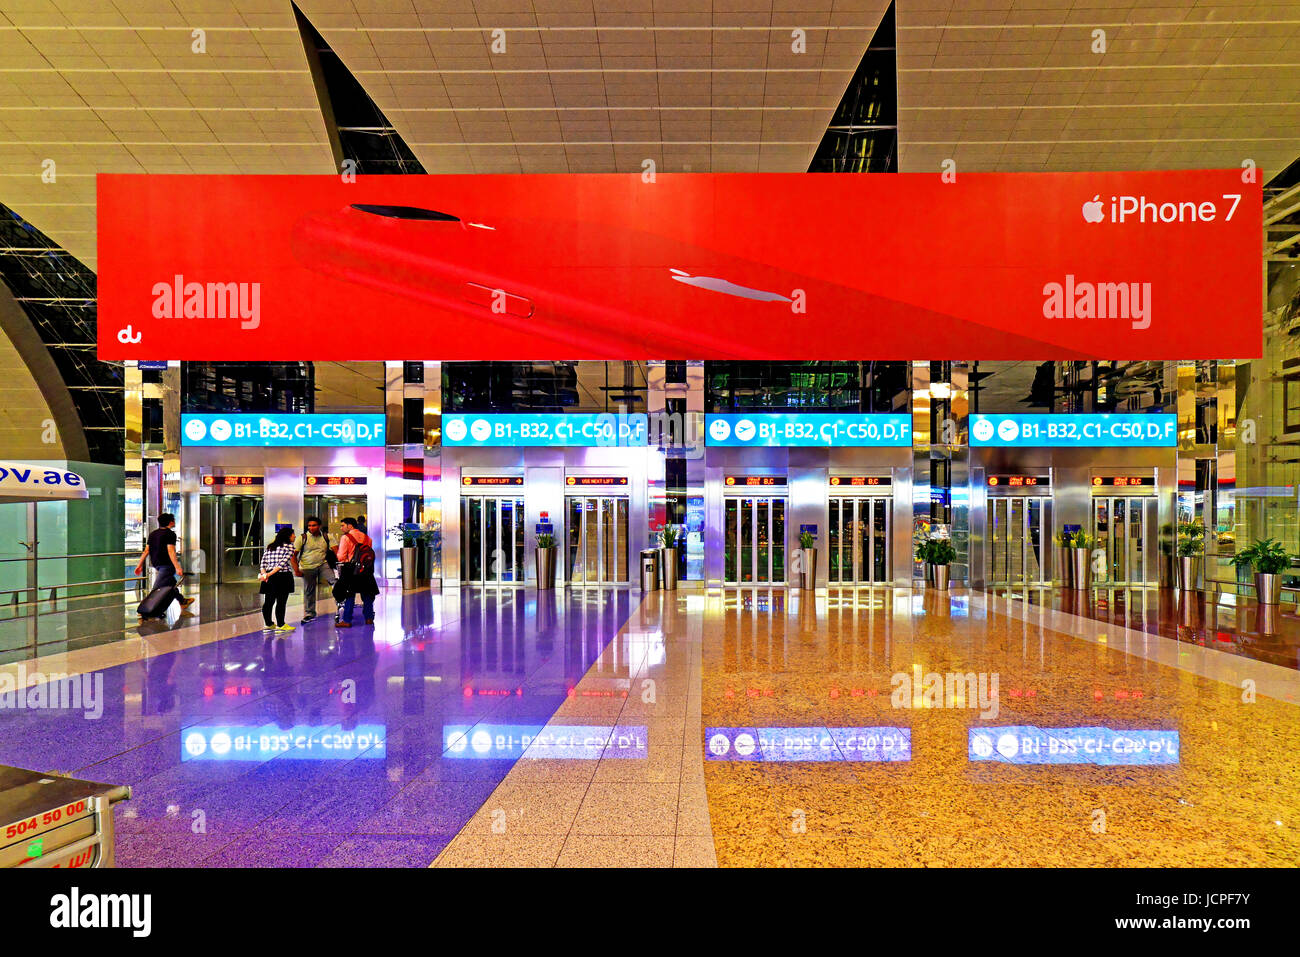 Dubai International Airport departure gates and IPhone 7 advert Stock Photo